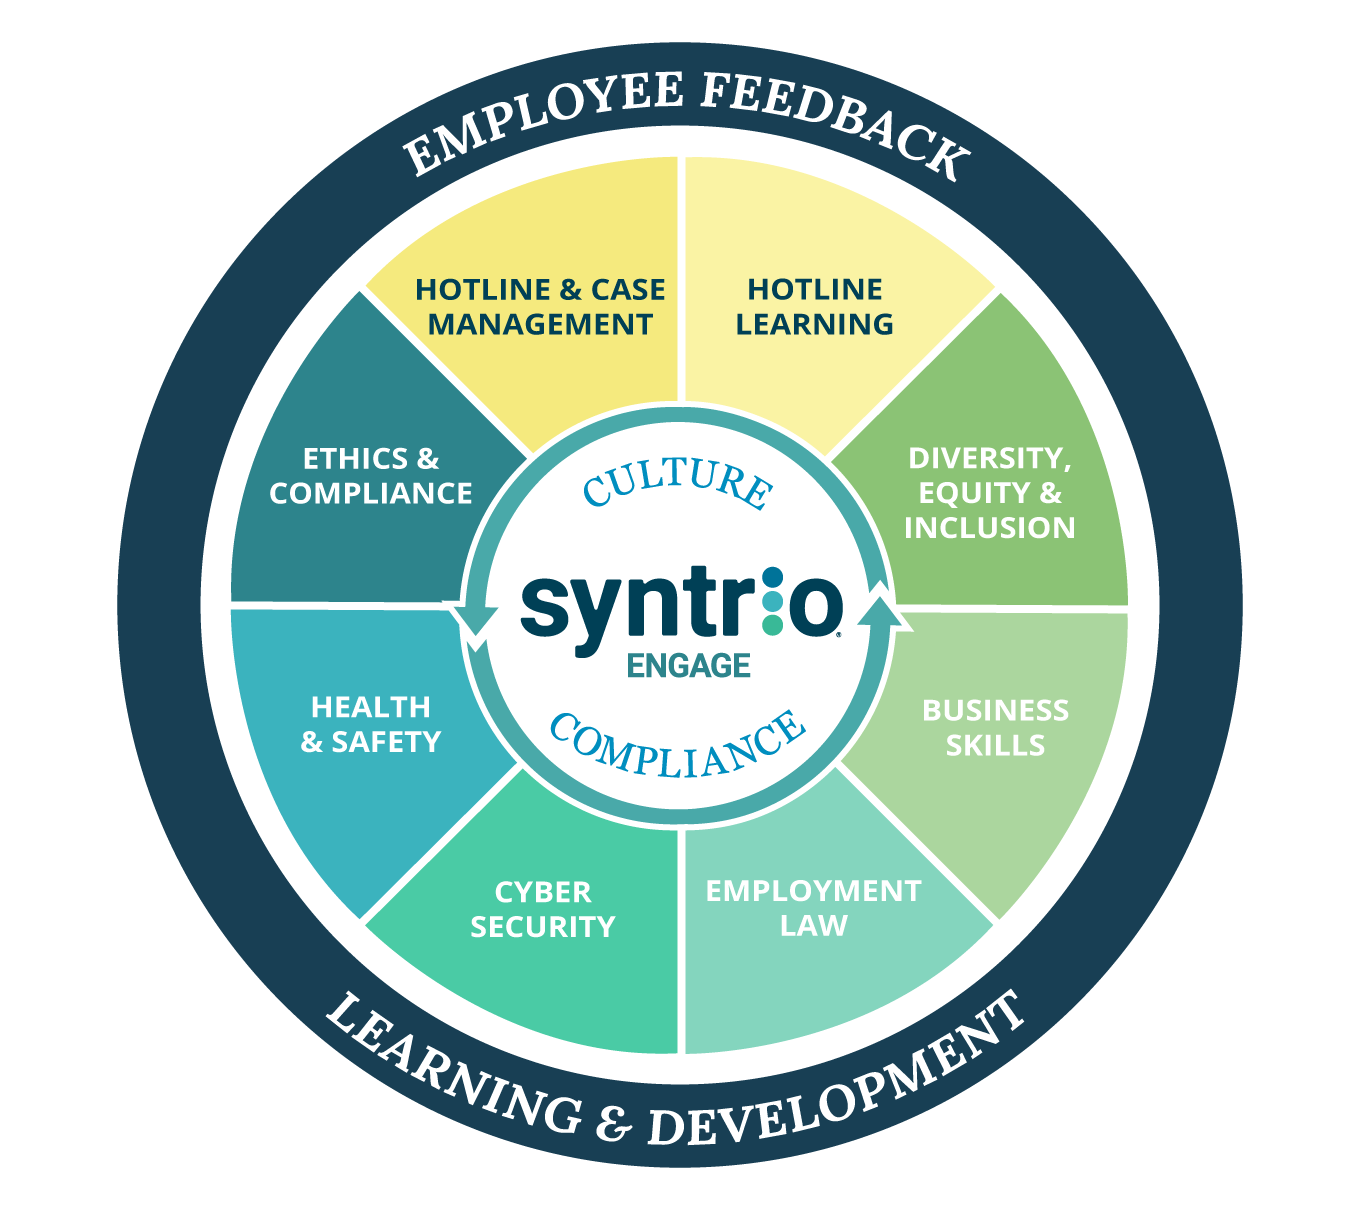 Syntrio Employee Feedback Learning & Development - Ethics & Compliance